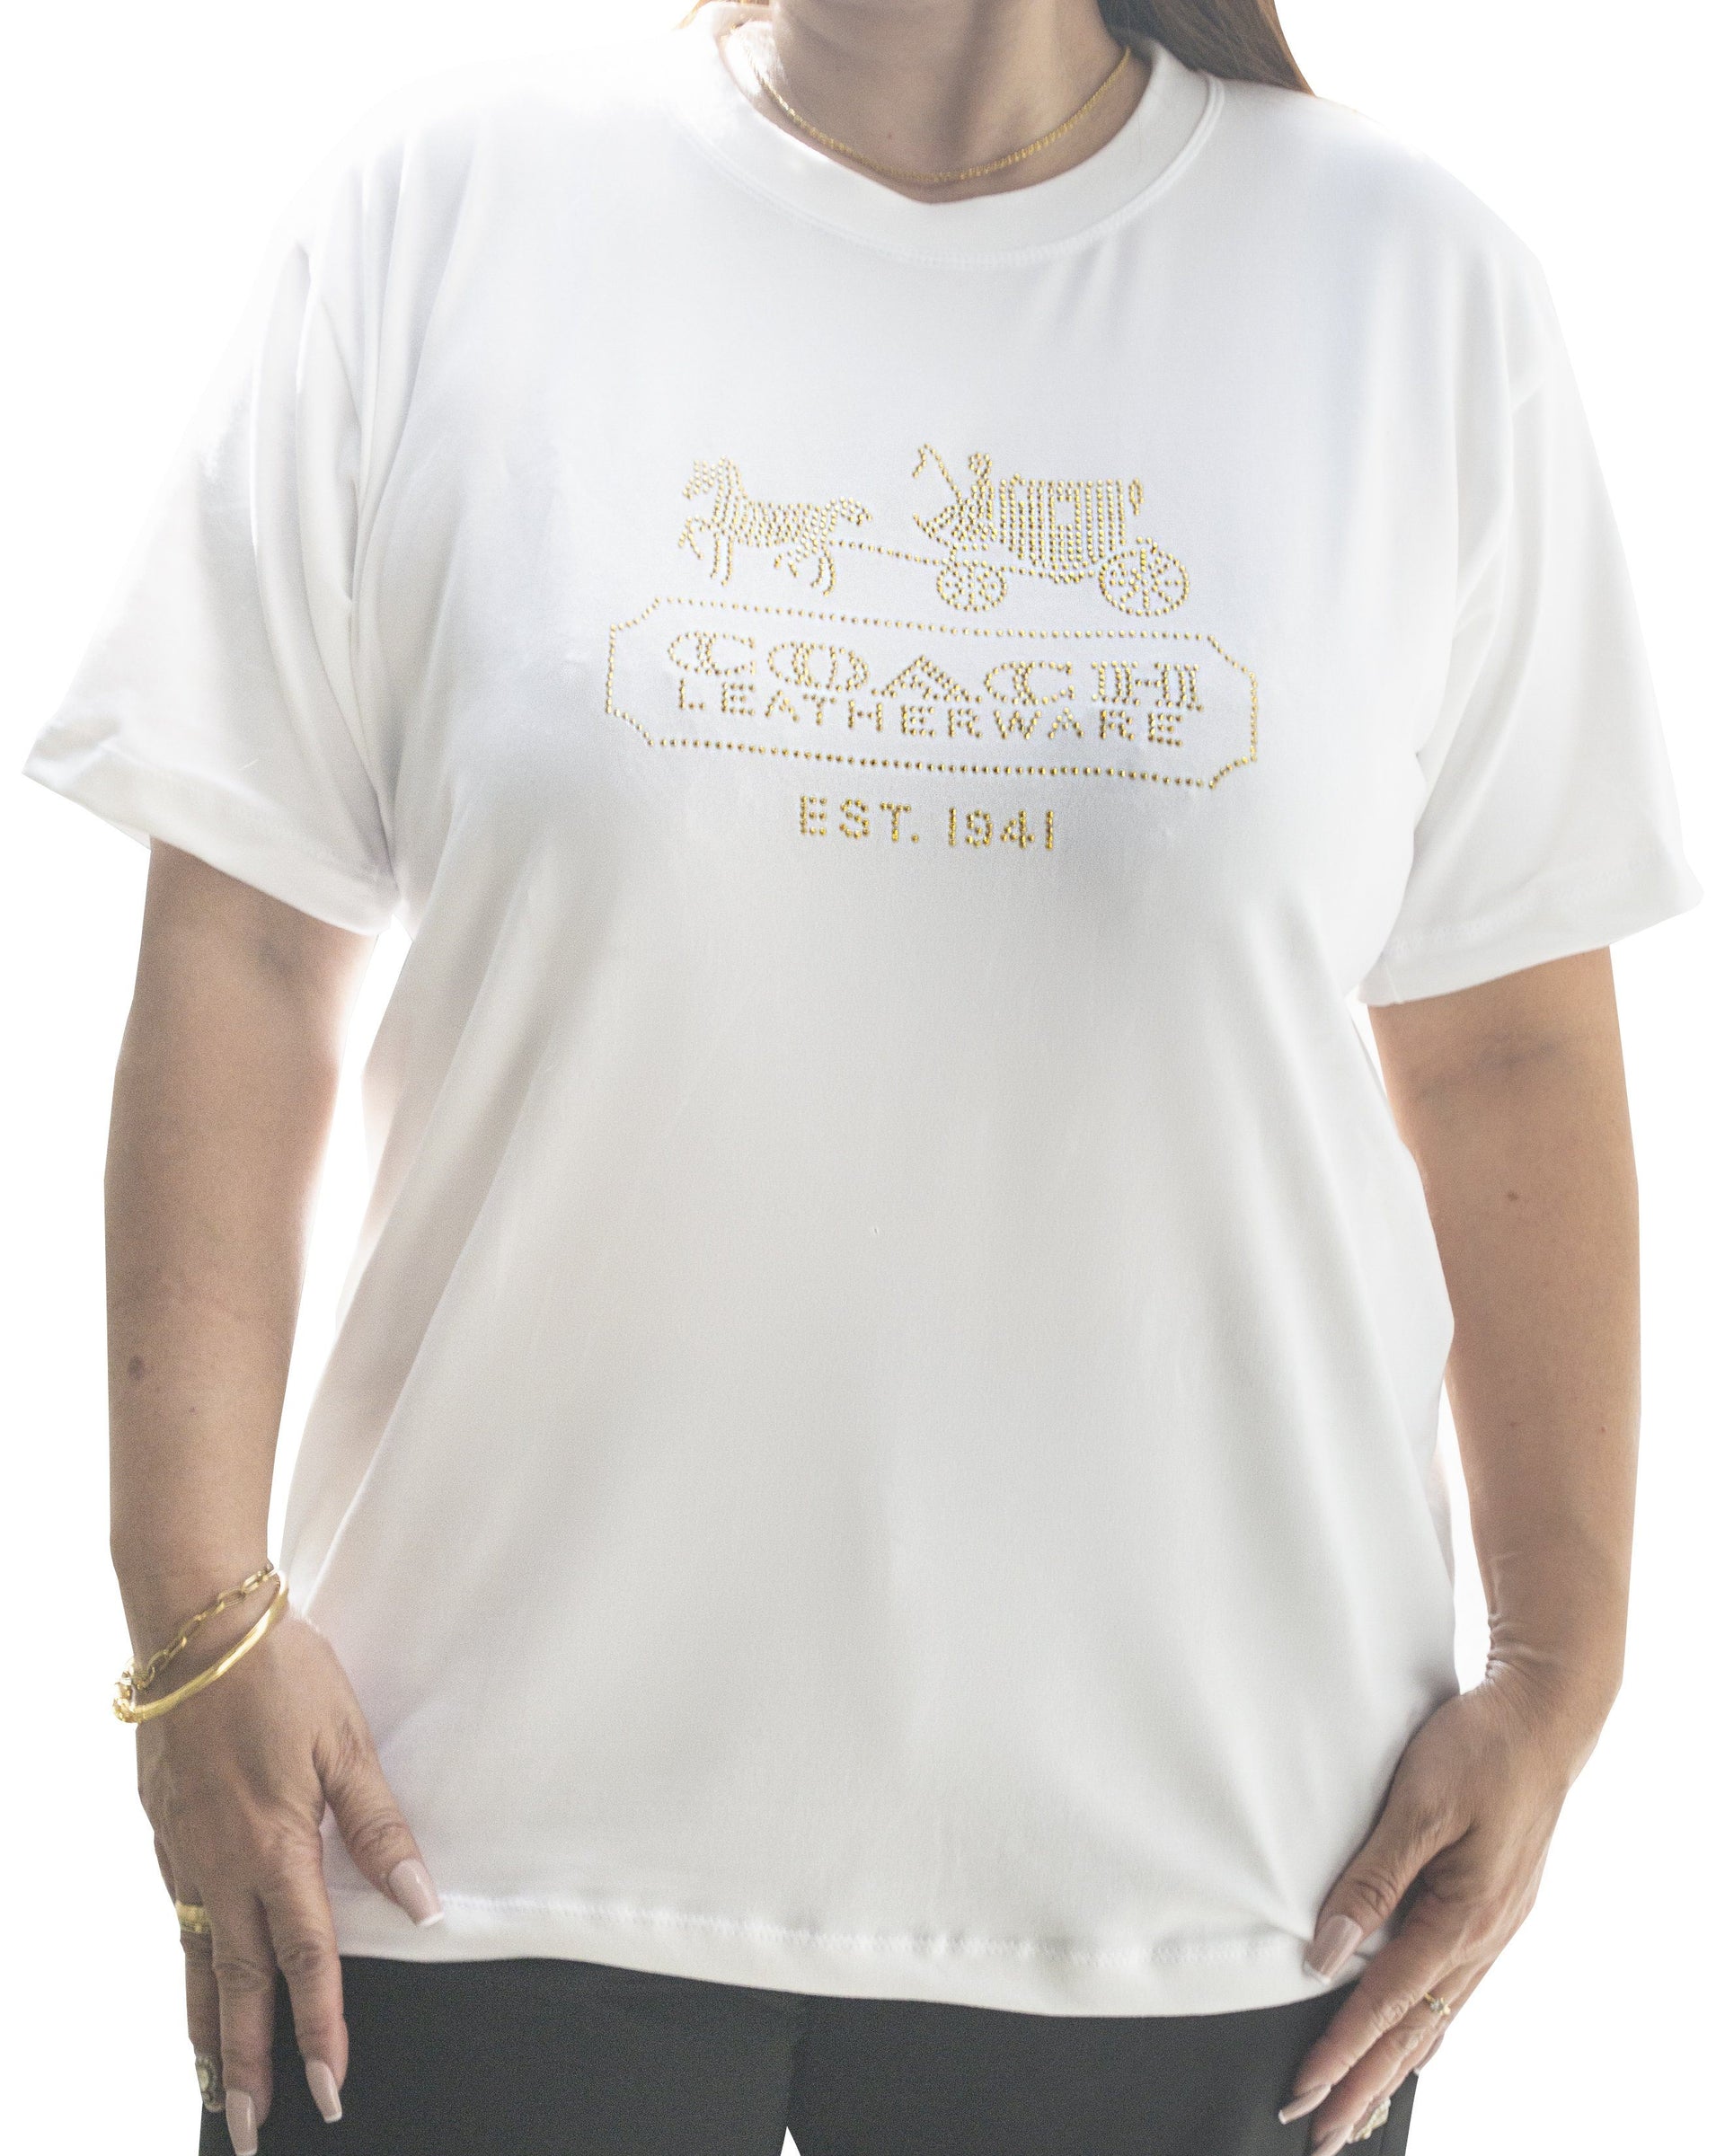 Designer Small Studs T-Shirt StyleMoto Coach White 